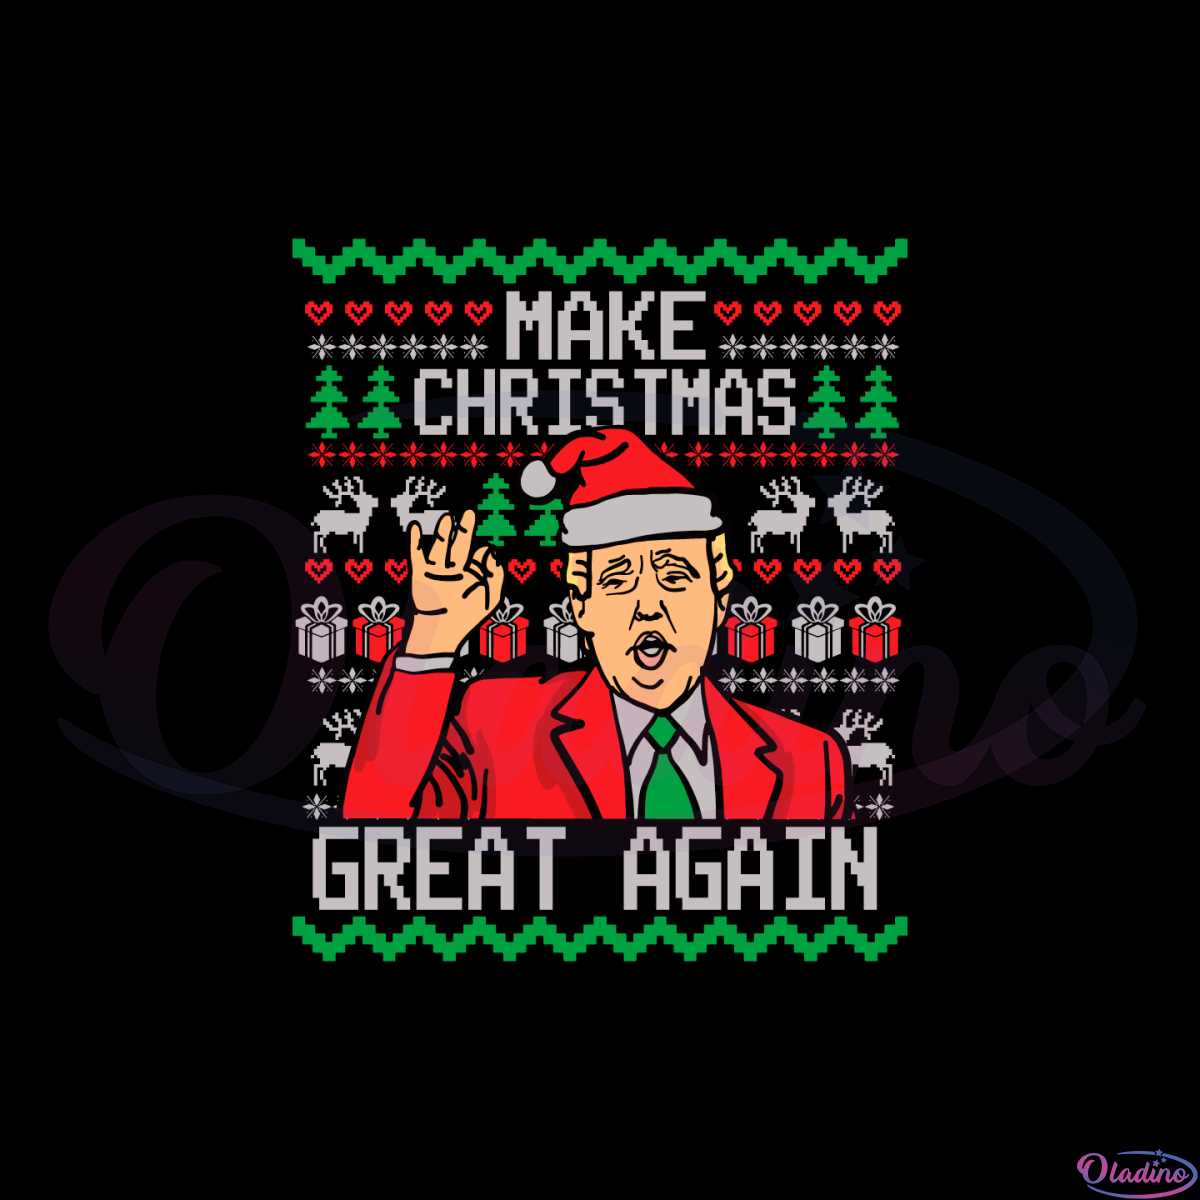 trump-make-christmas-great-again-svg-graphic-designs-files